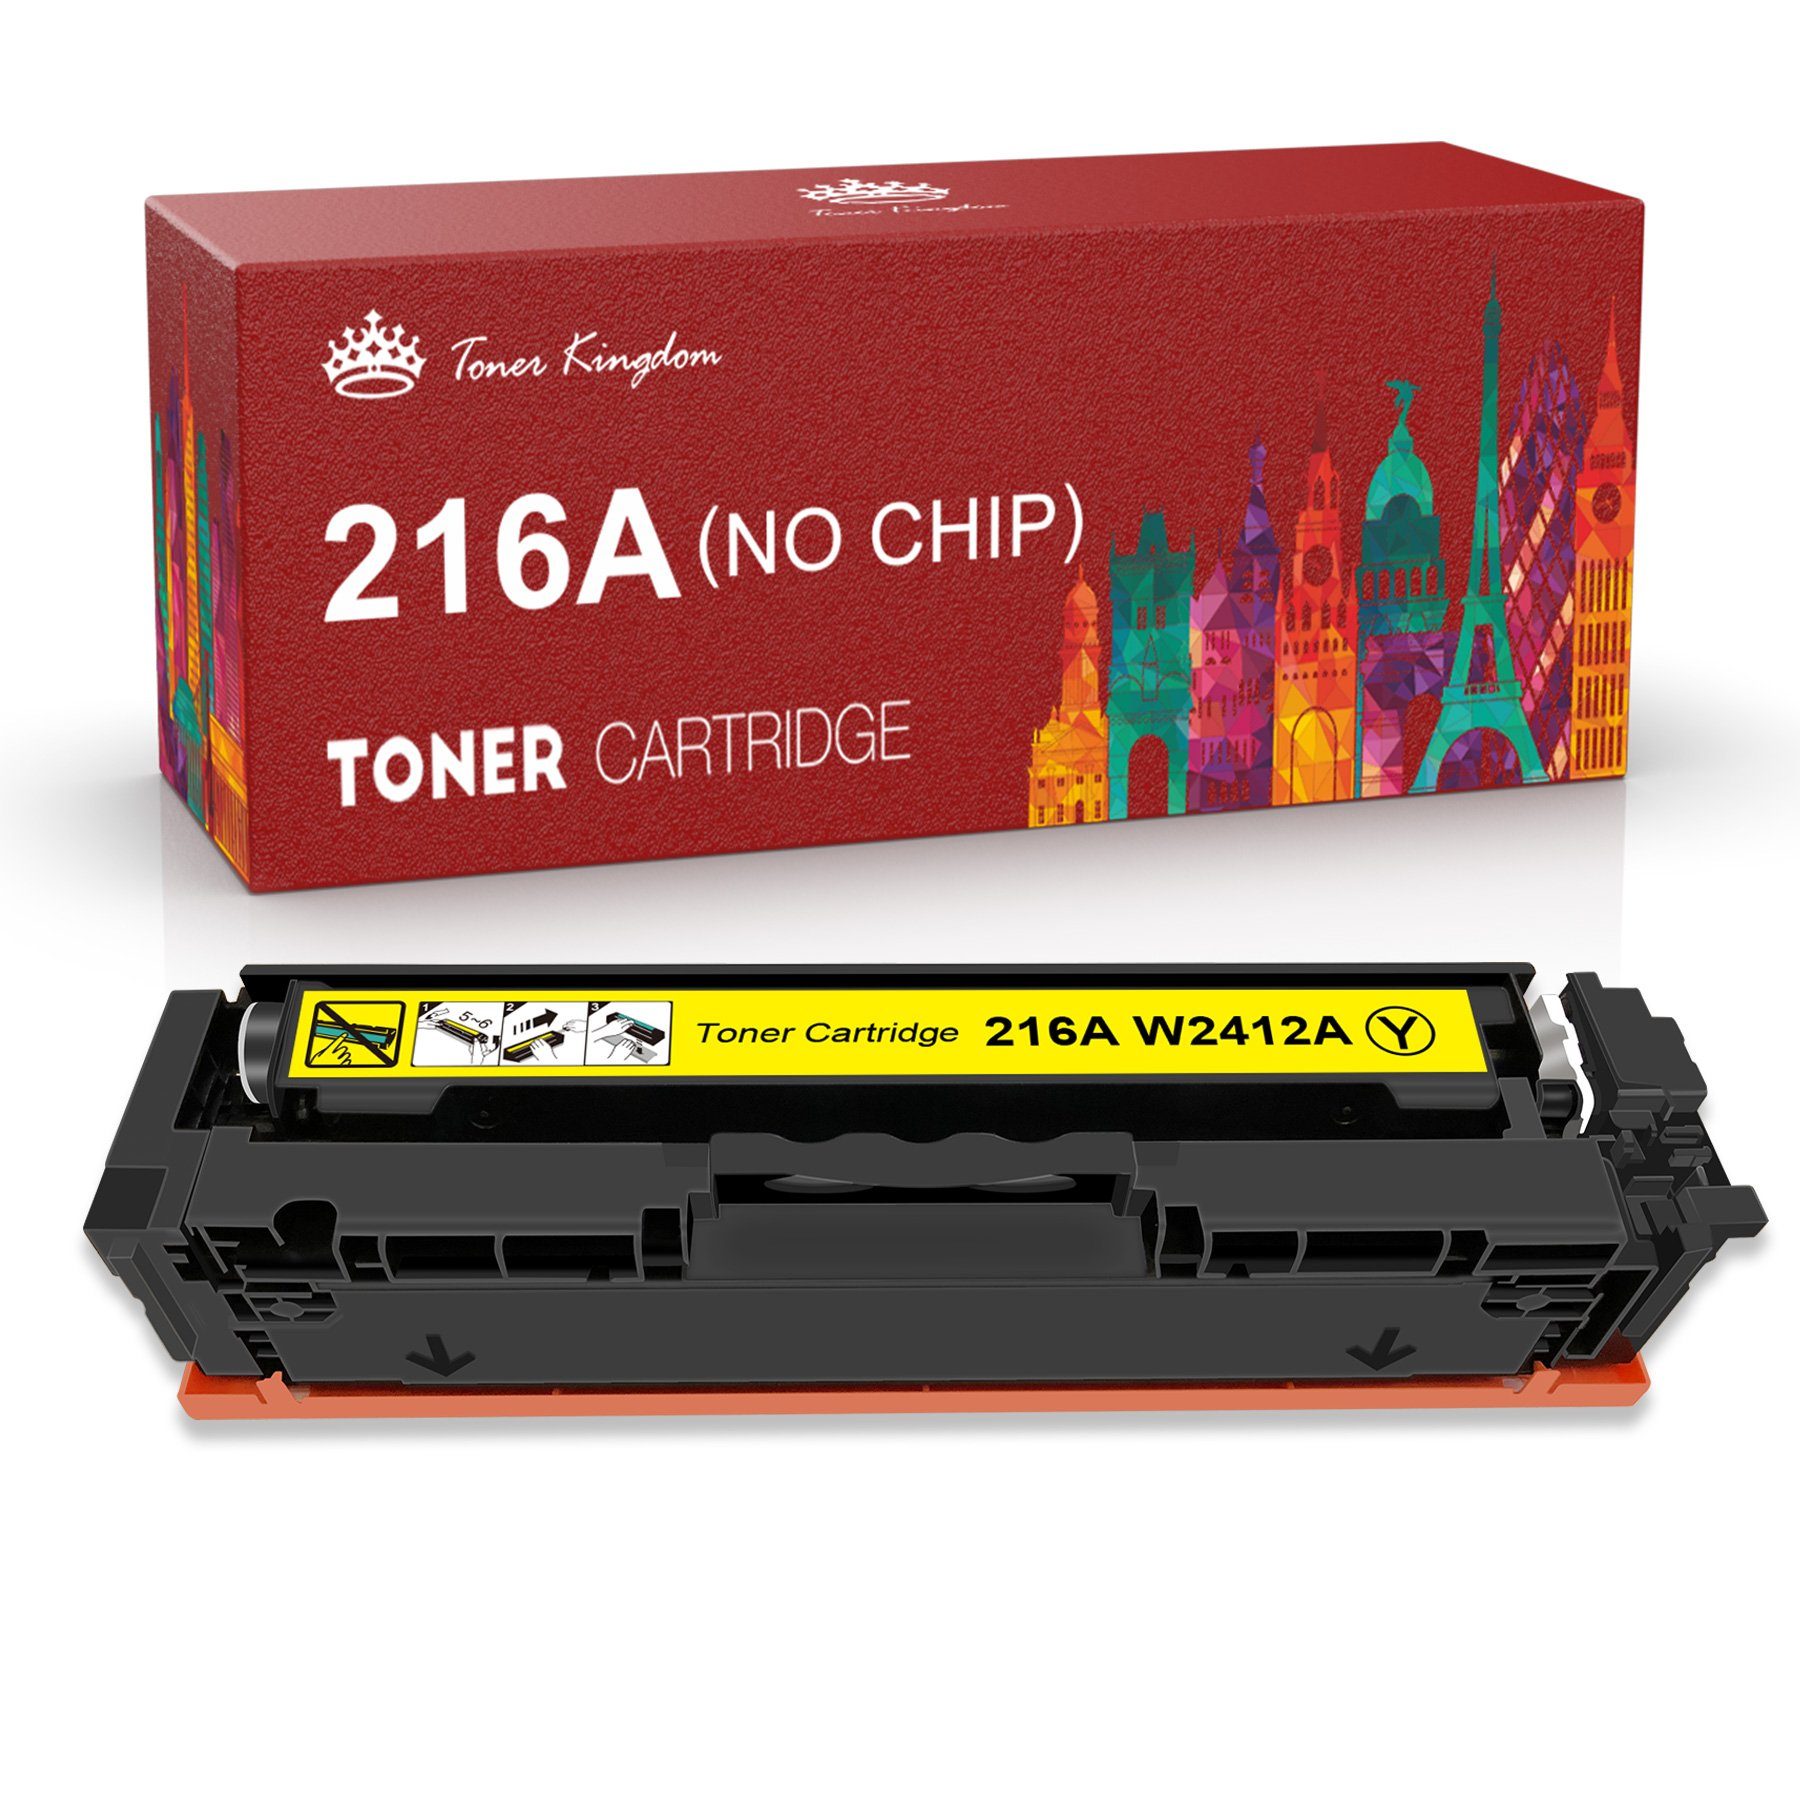 Toner Kingdom Tonerpatrone für HP 216A Ersatz 216 A HP216A HP216 Color Gelb